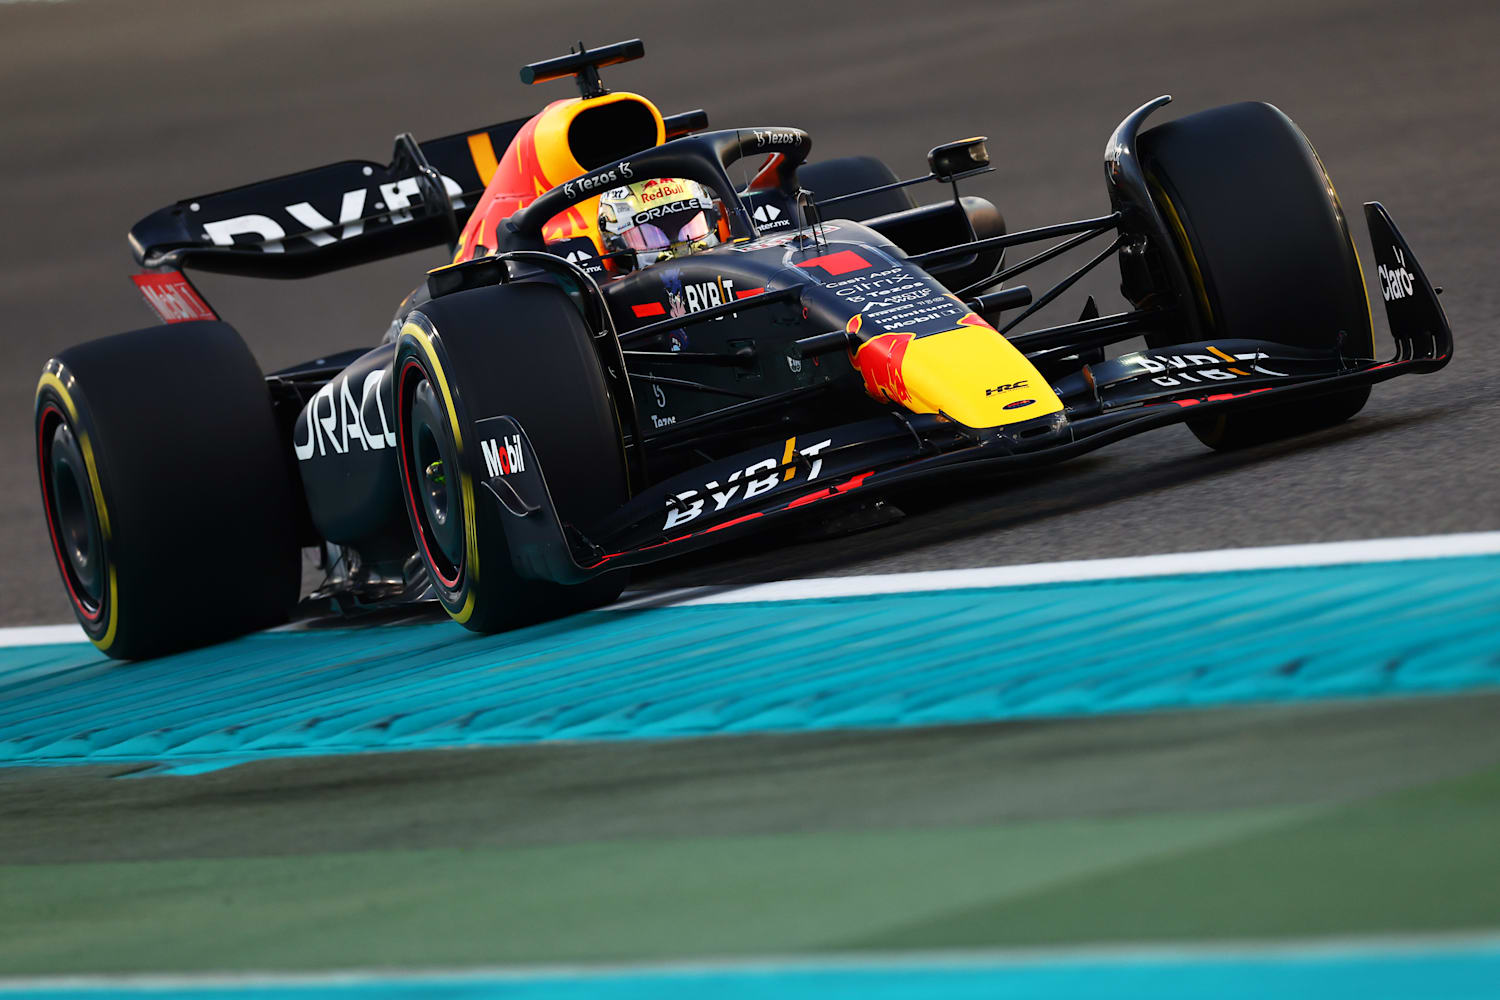 Abu Dhabi Grand Prix 2022 F1 race report and reaction